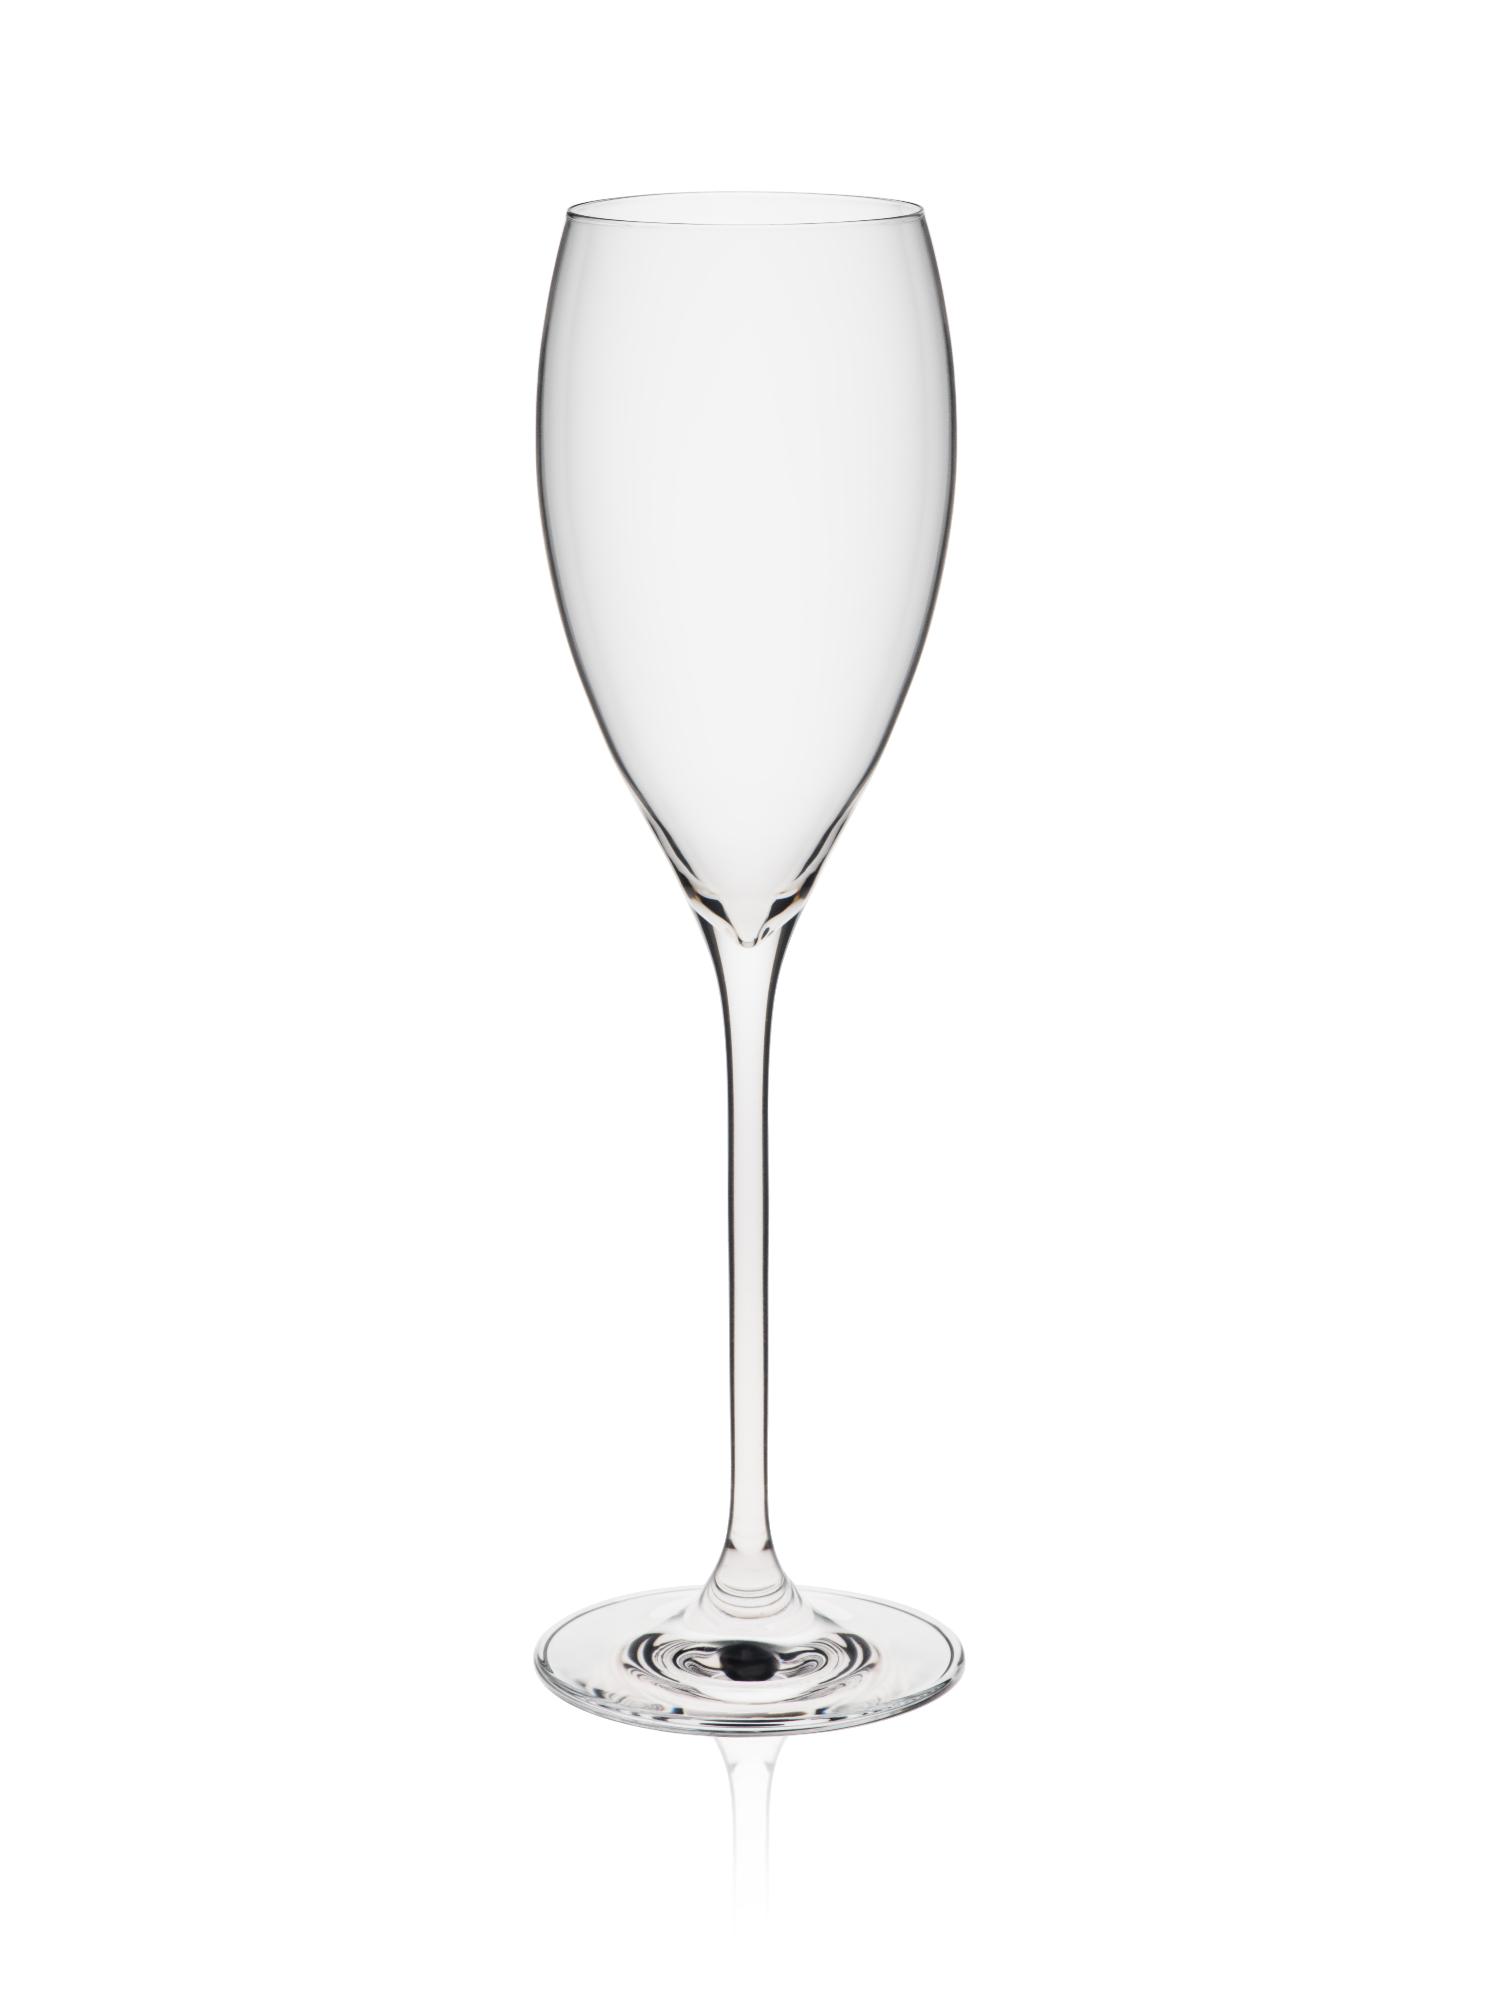 Le Vin champagne glass, 260ml